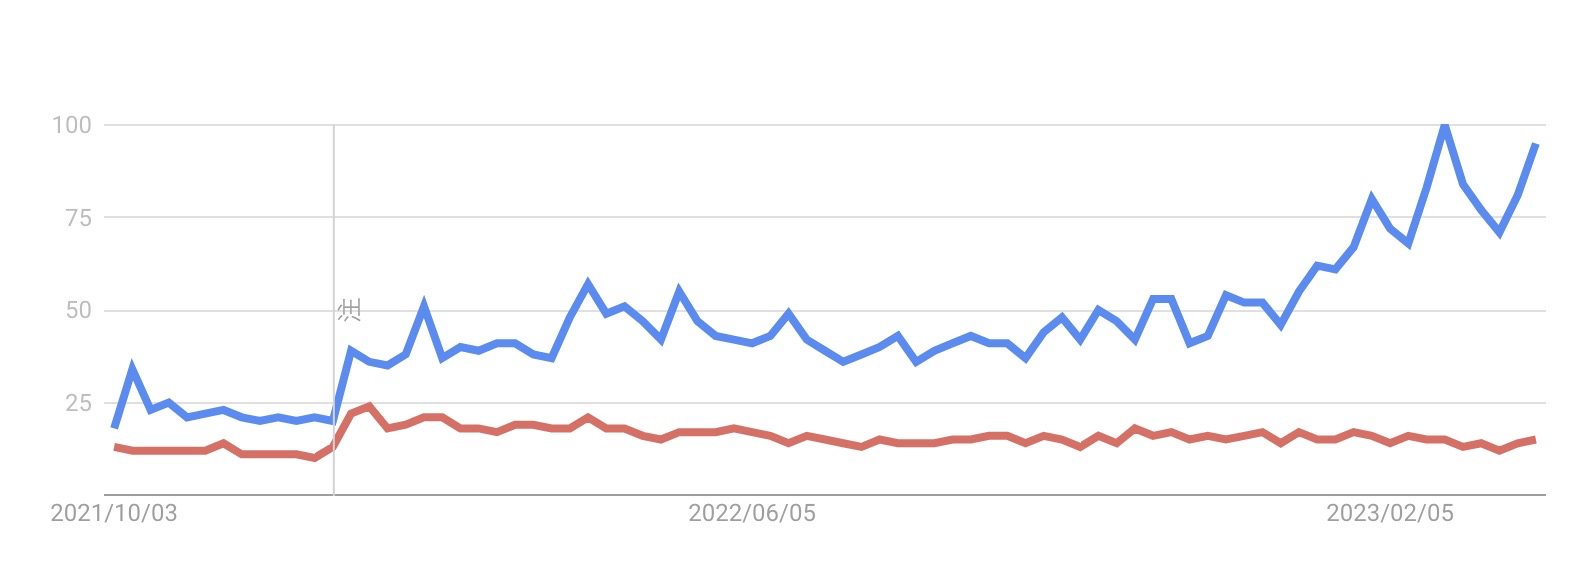  Evernote（赤）と Notion（青）の検索ボリューム推移（Google Trends）